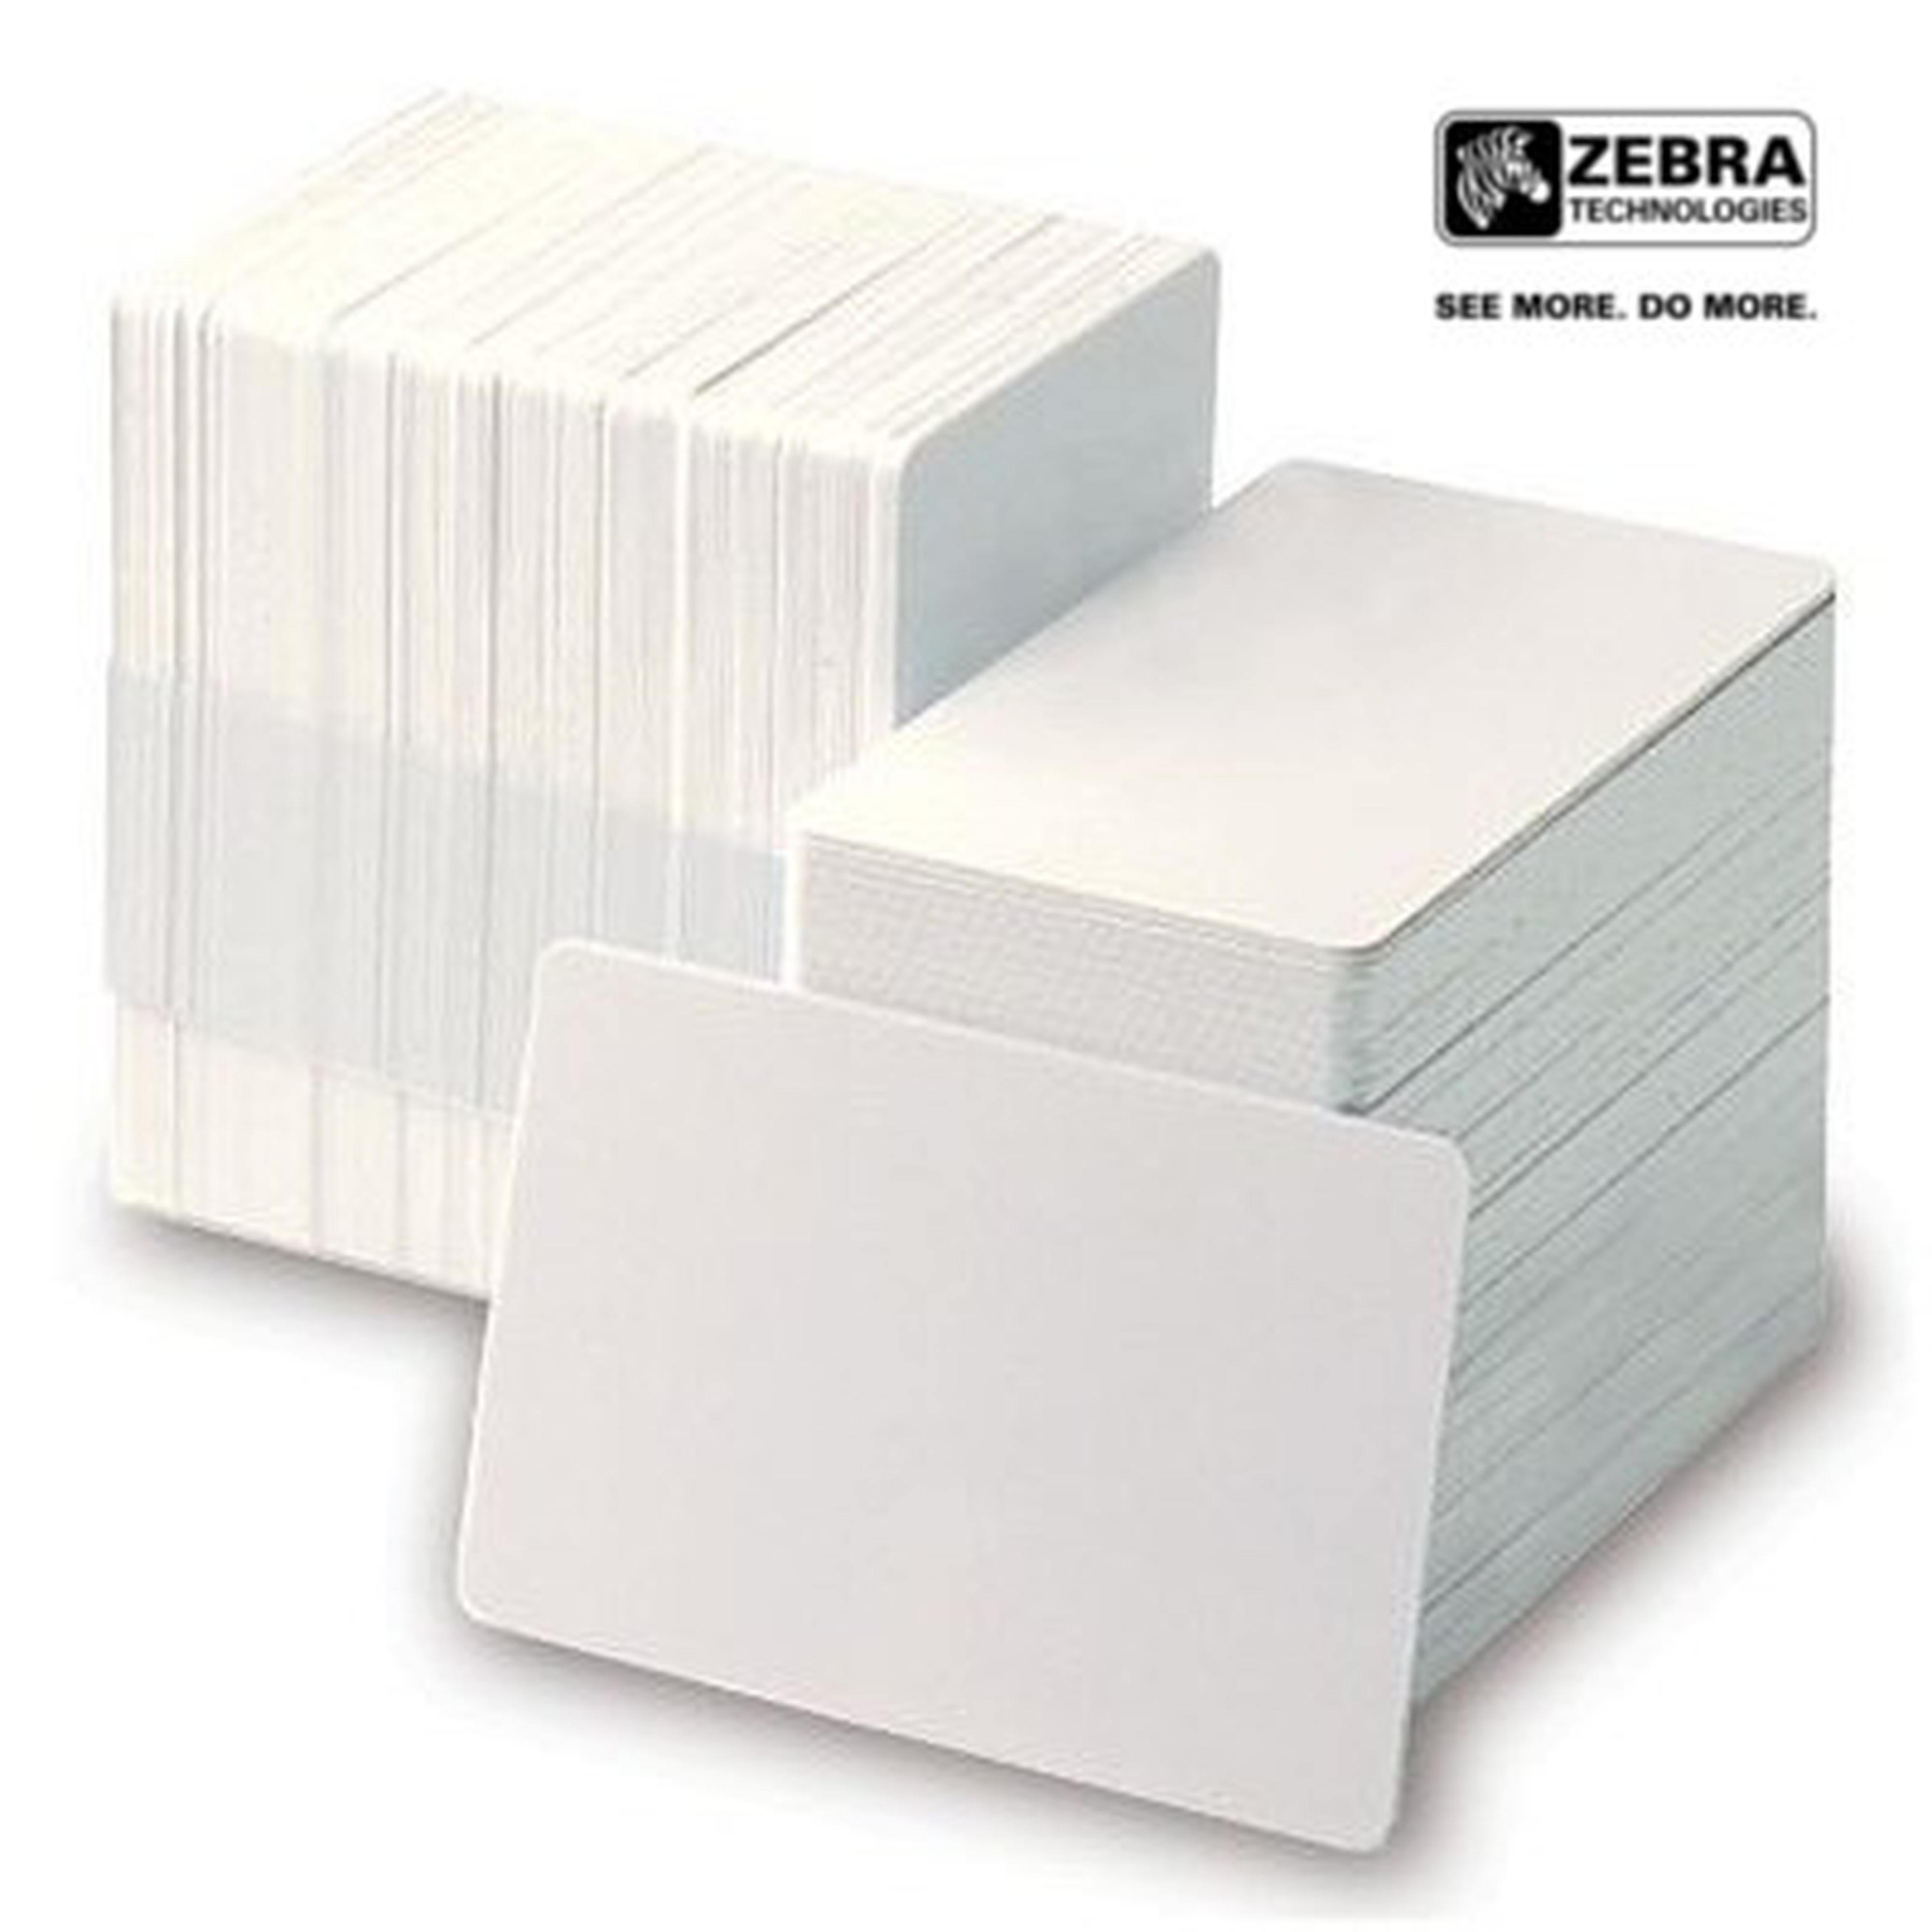 Blank PVC Cards - Standard CR80 Cards